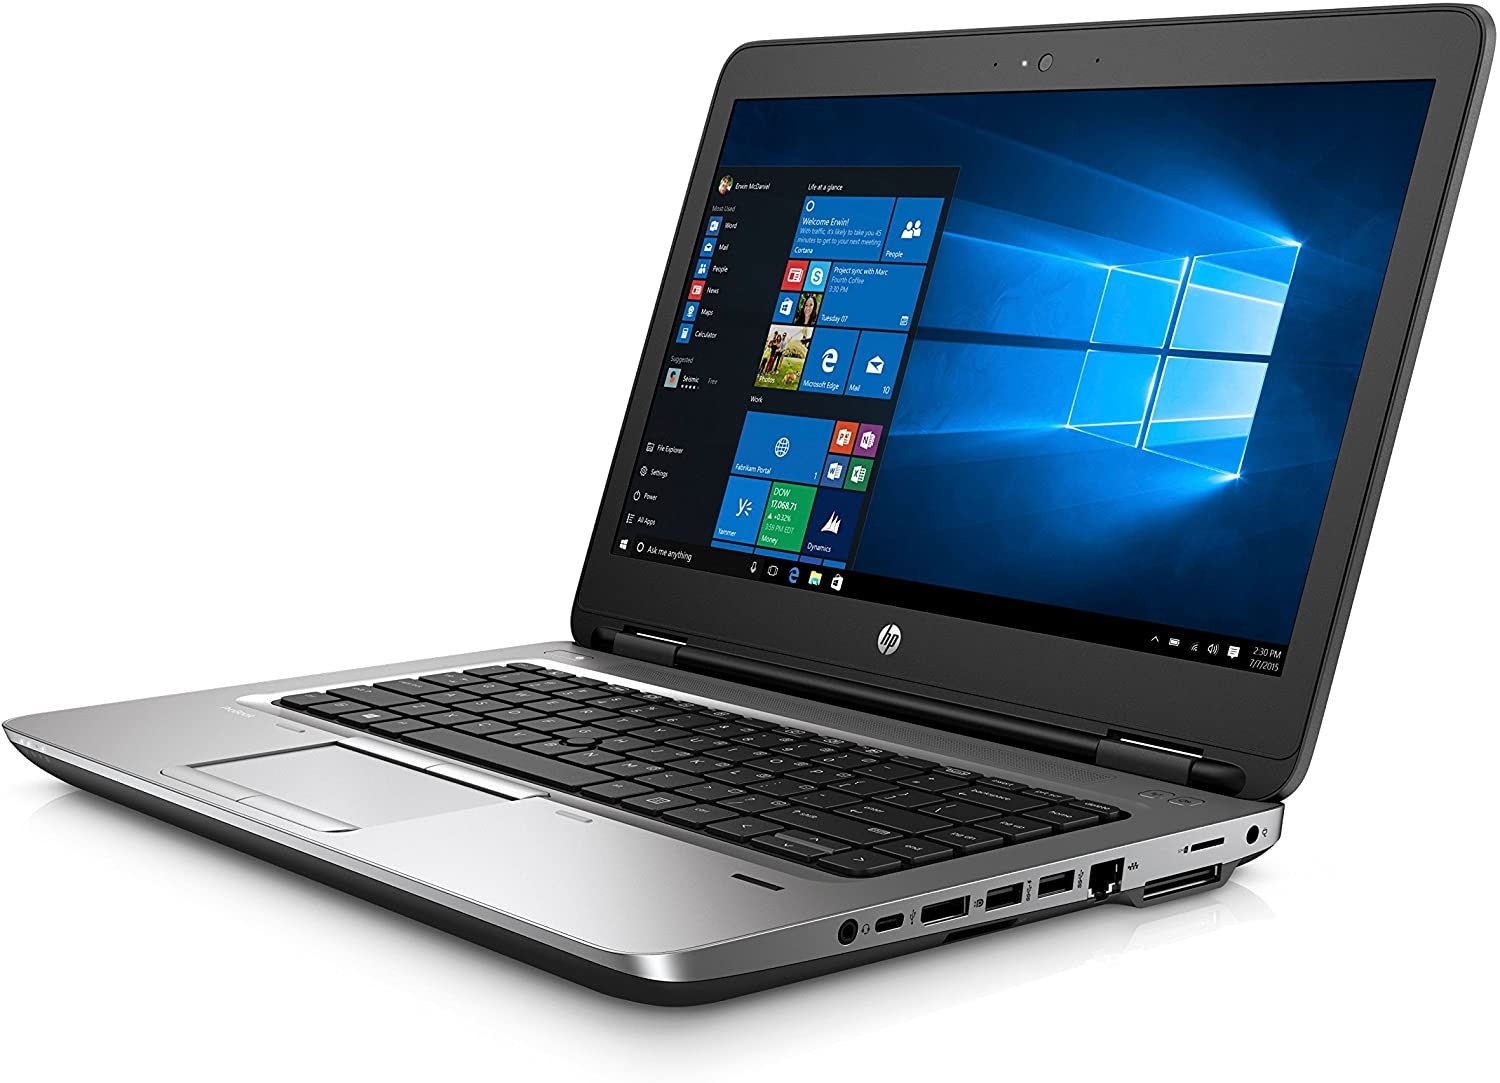 Laptop HP Probook 640 G2- Core i5, 6ta gen-8GB RAM- 256GB SSD- 14"- Windows 10 PRO- Equipo Clase A, Reacondicionado.